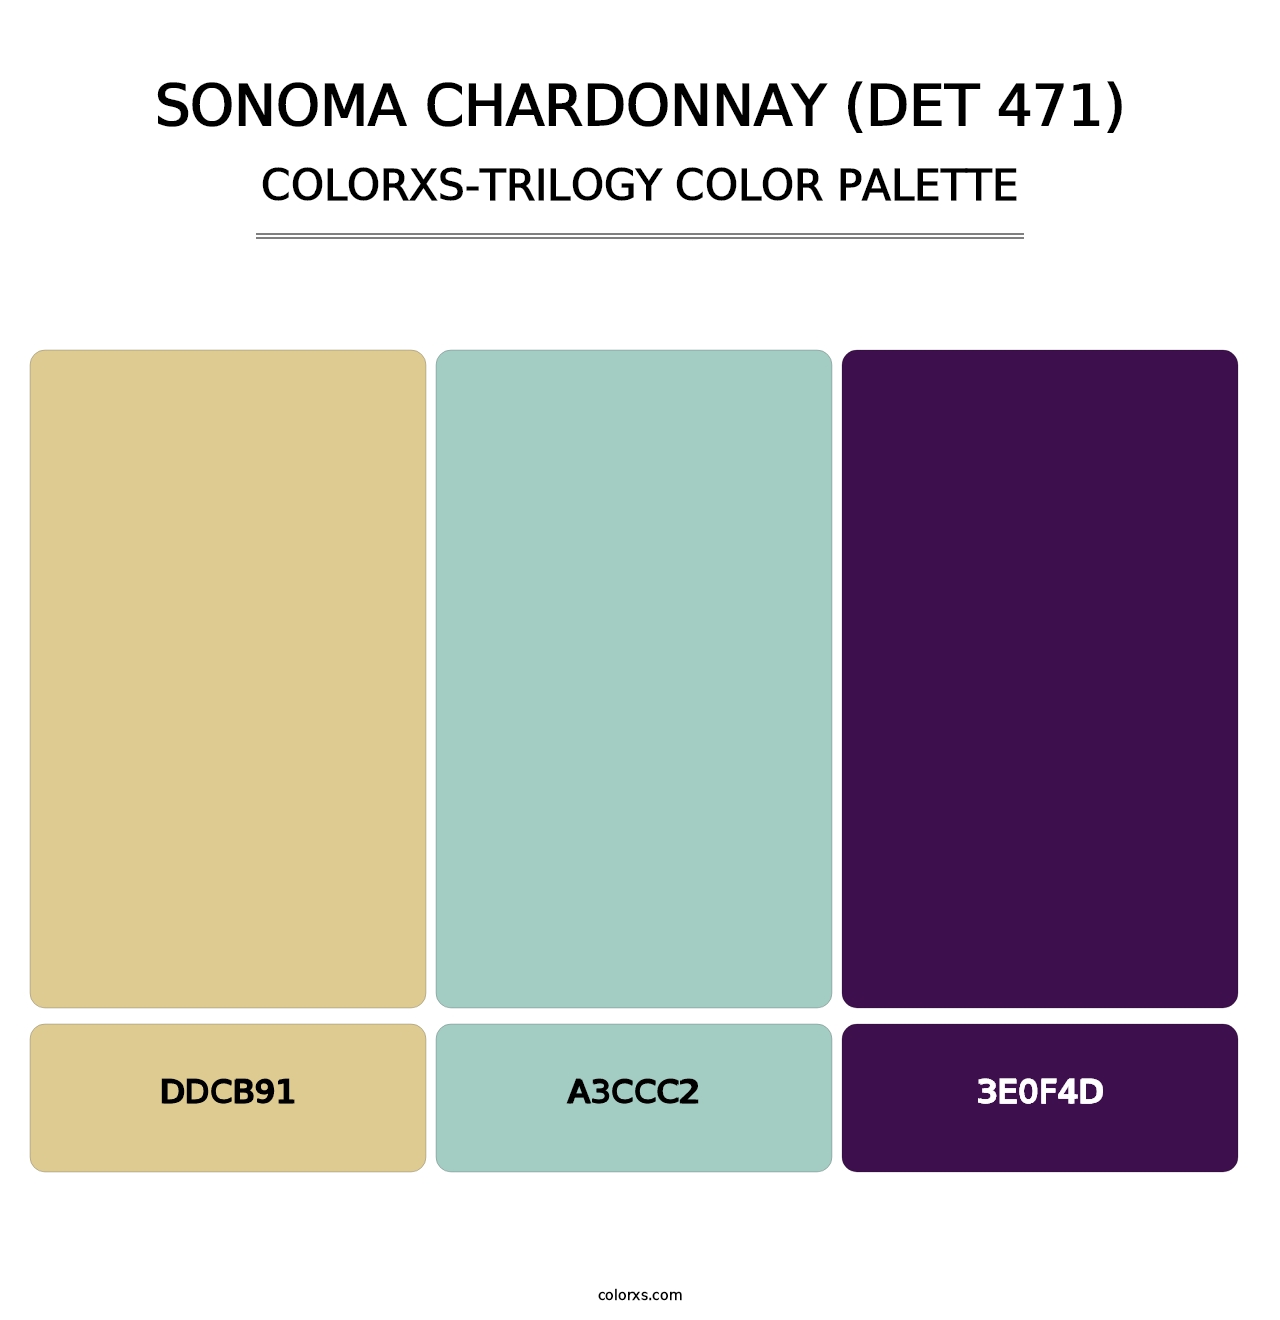 Sonoma Chardonnay (DET 471) - Colorxs Trilogy Palette